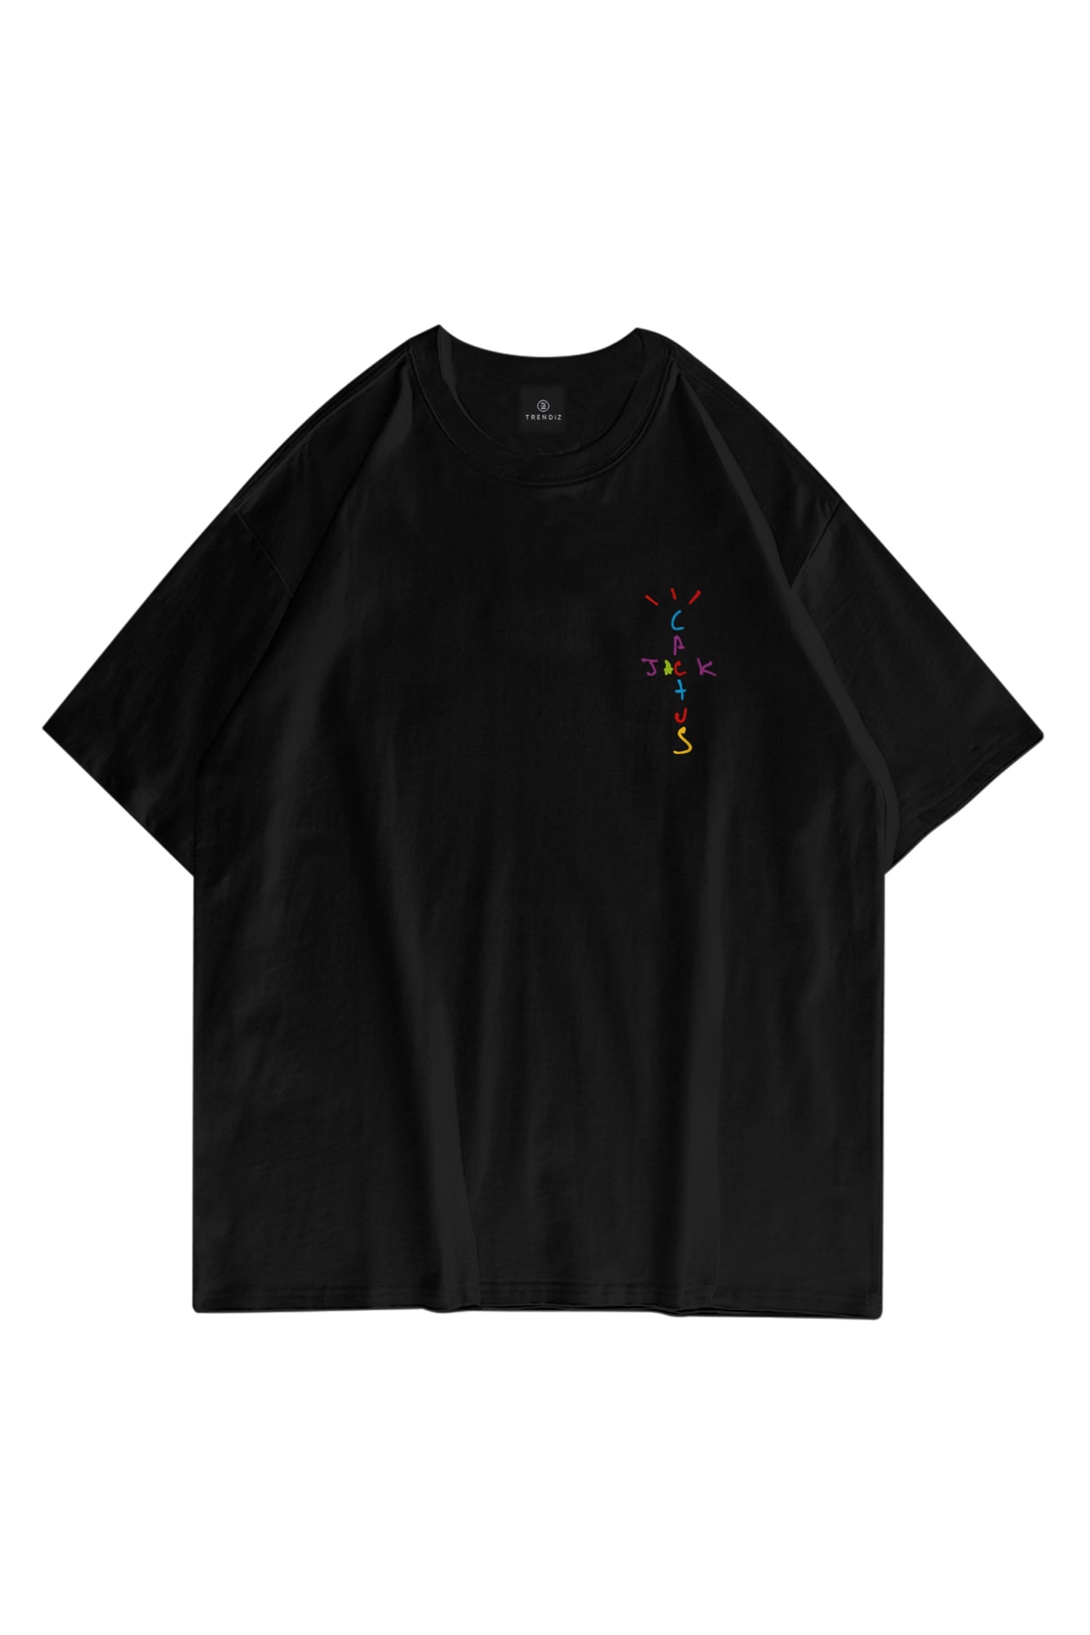 Trendiz Unisex Renkli Cactusjack Siyah Tshirt